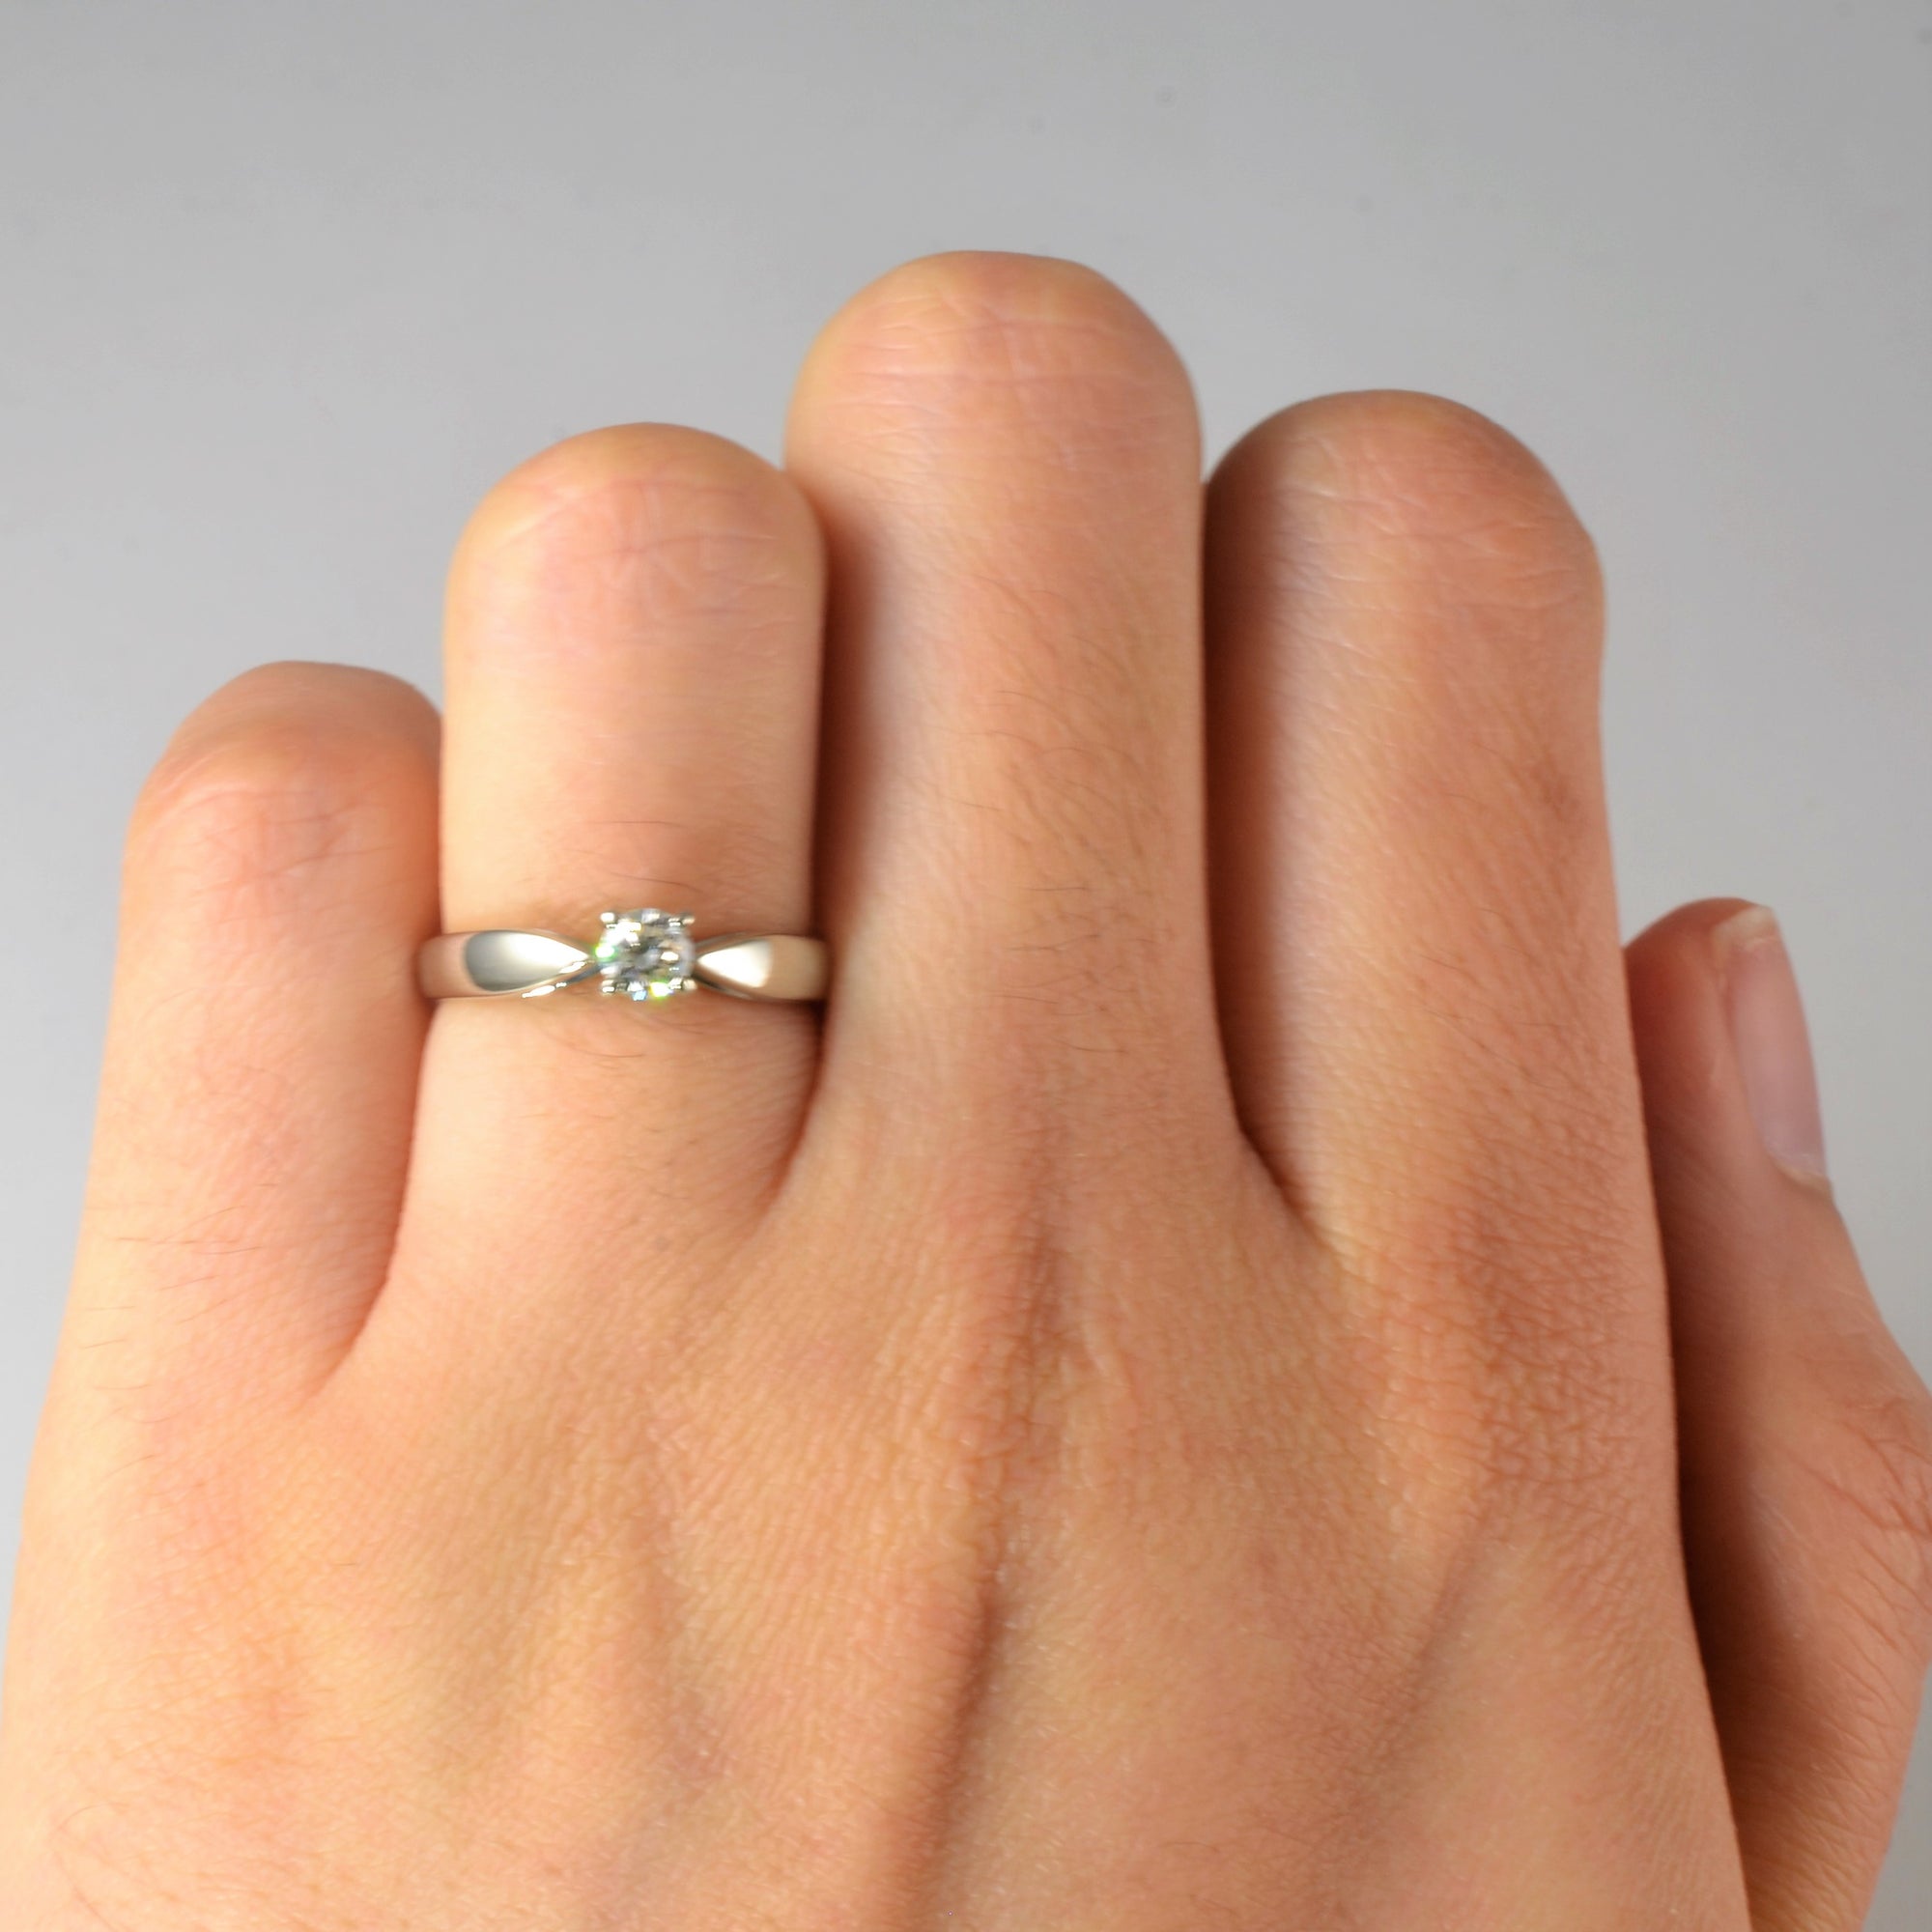 Round brilliant cut diamond ring, Canada brilliant cut rings for sale